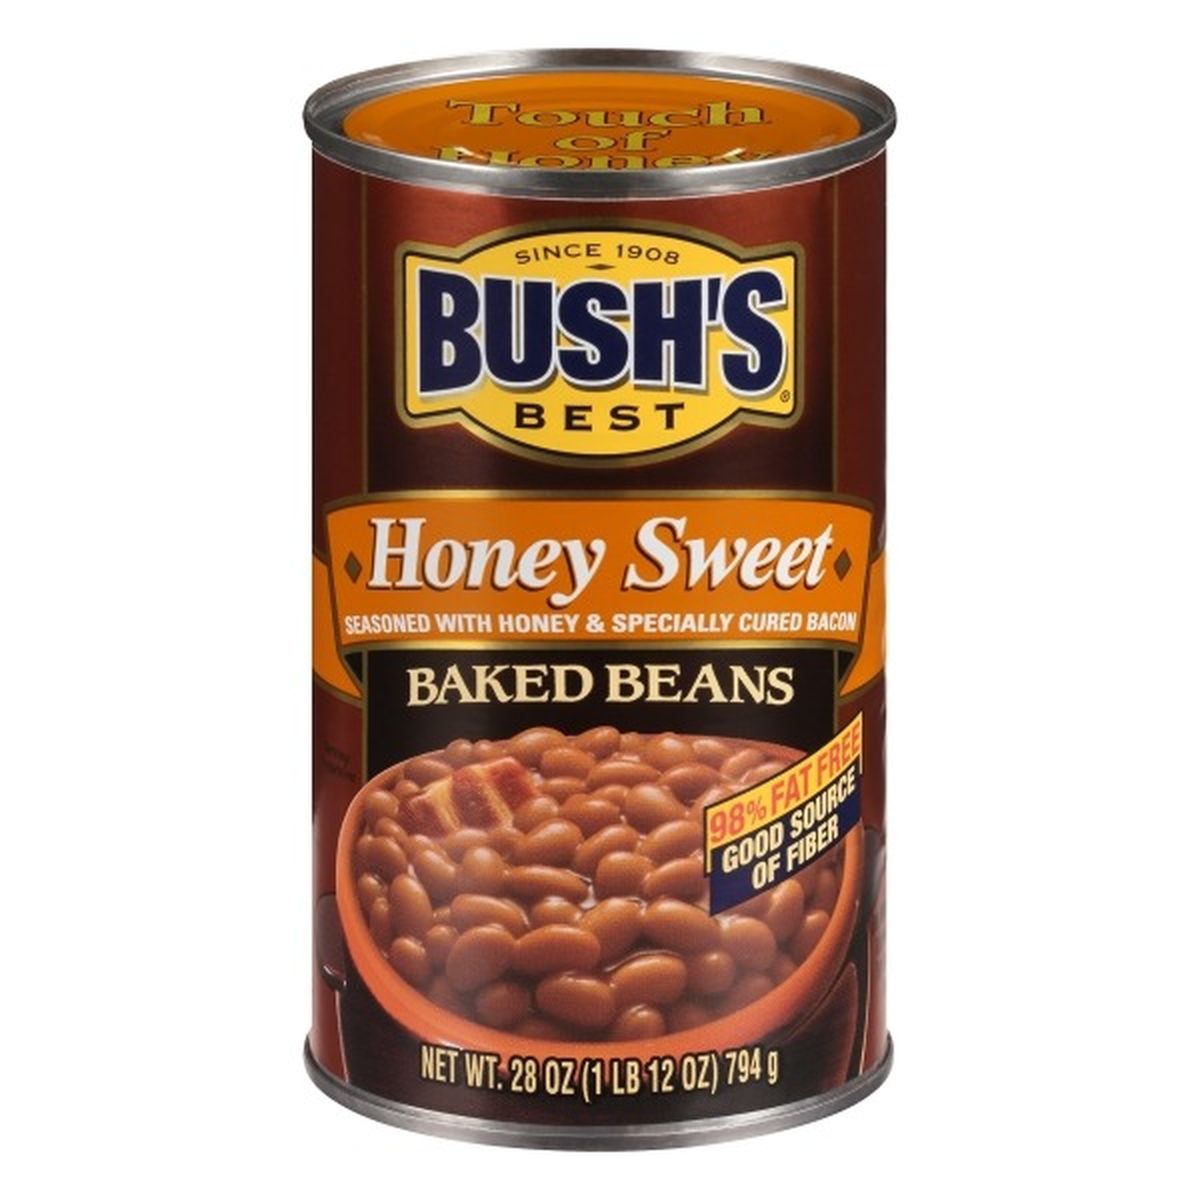 Calories in Bush's Best Baked Beans, Honey Sweet